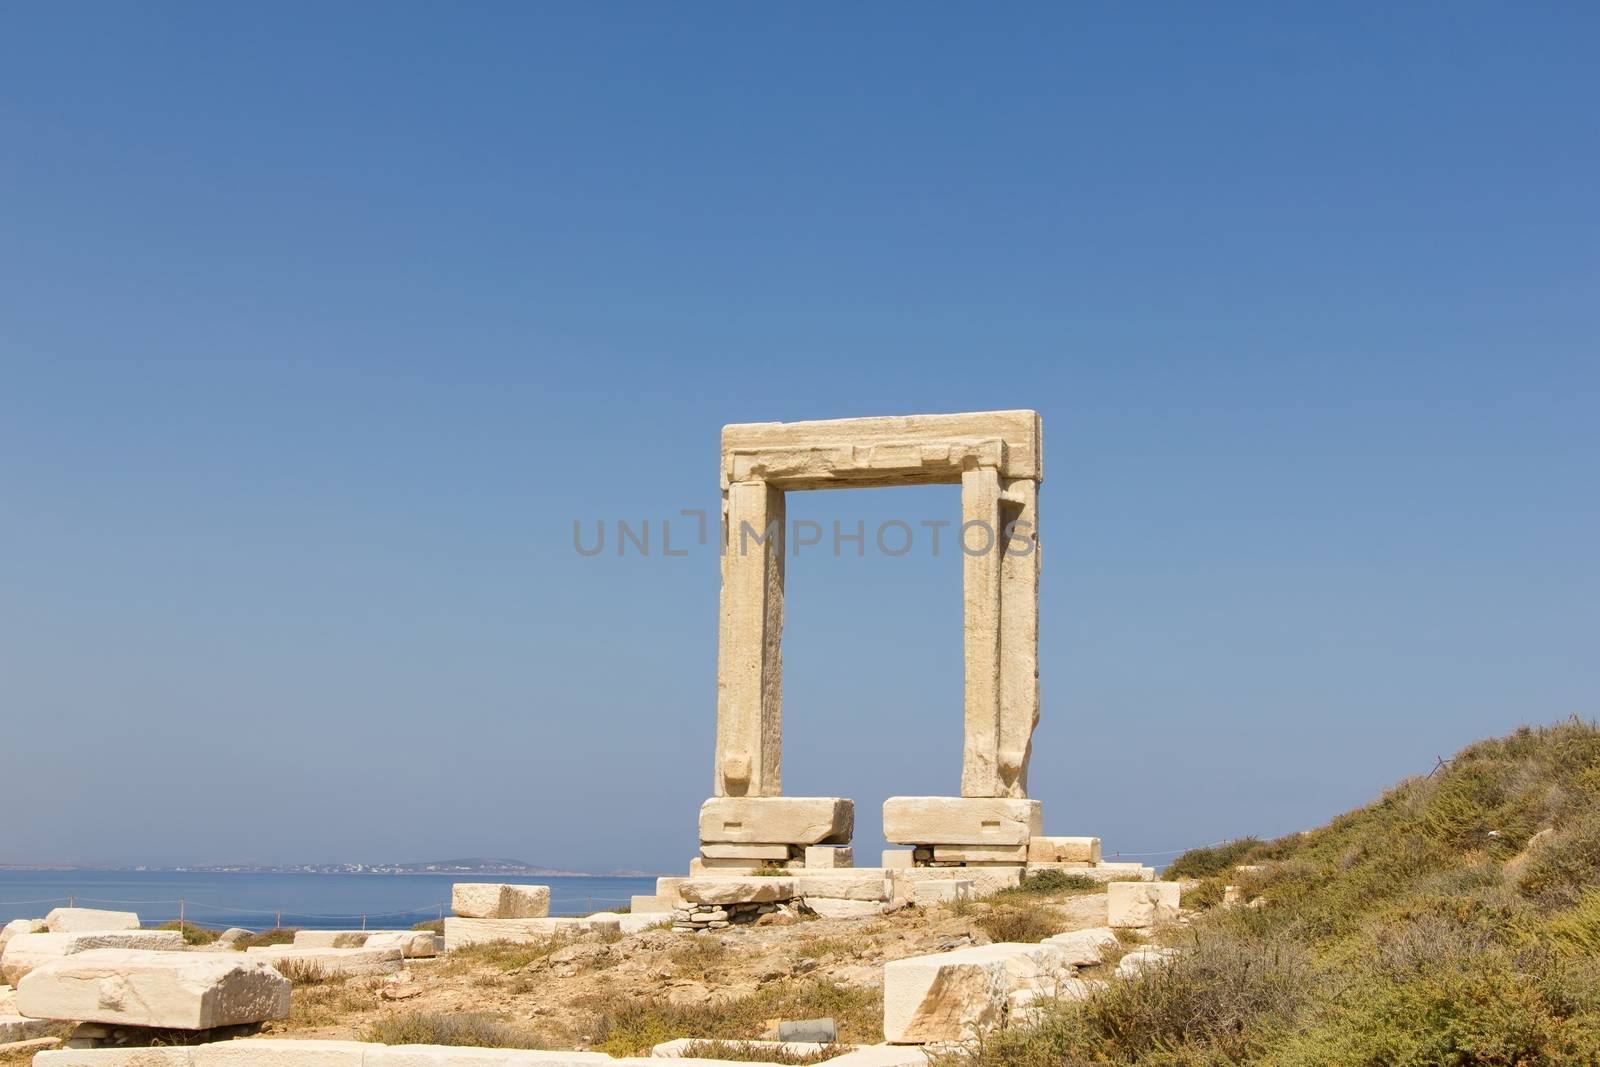 The "Portara", the lintel of Lygdamis Temple of Apollo at Naxos